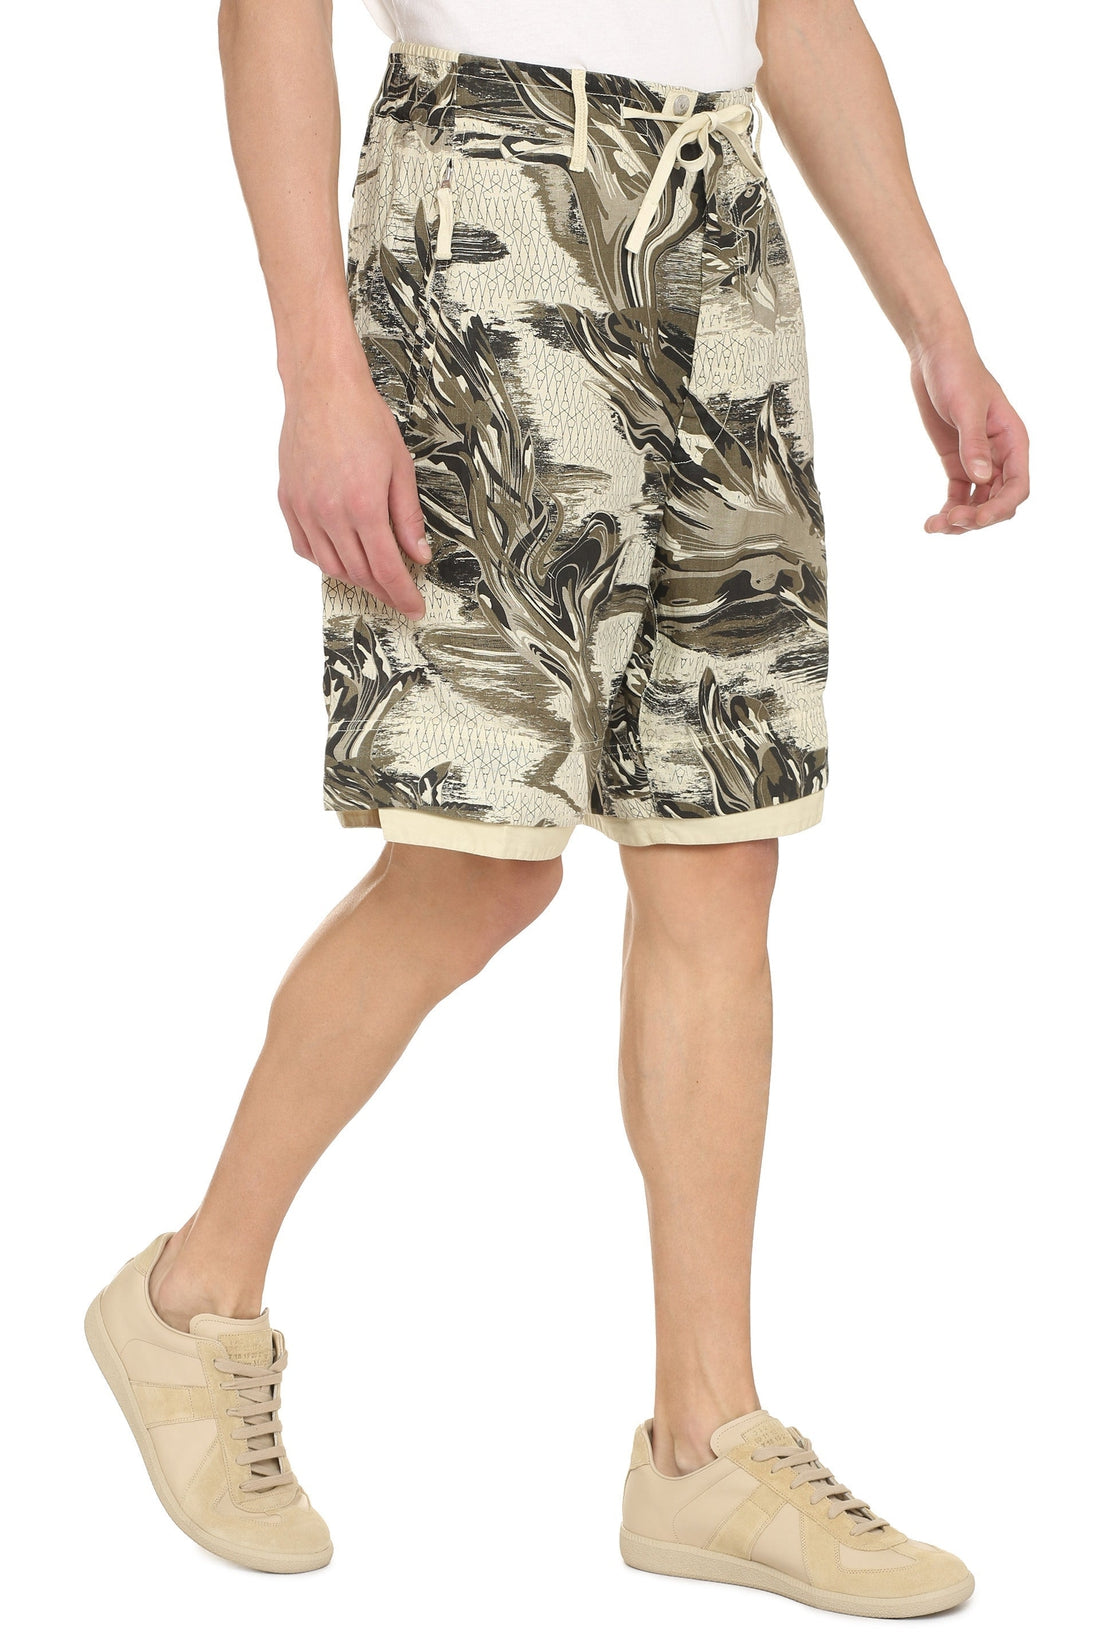 Stone Island Shadow Project-OUTLET-SALE-Linen bermuda-shorts-ARCHIVIST